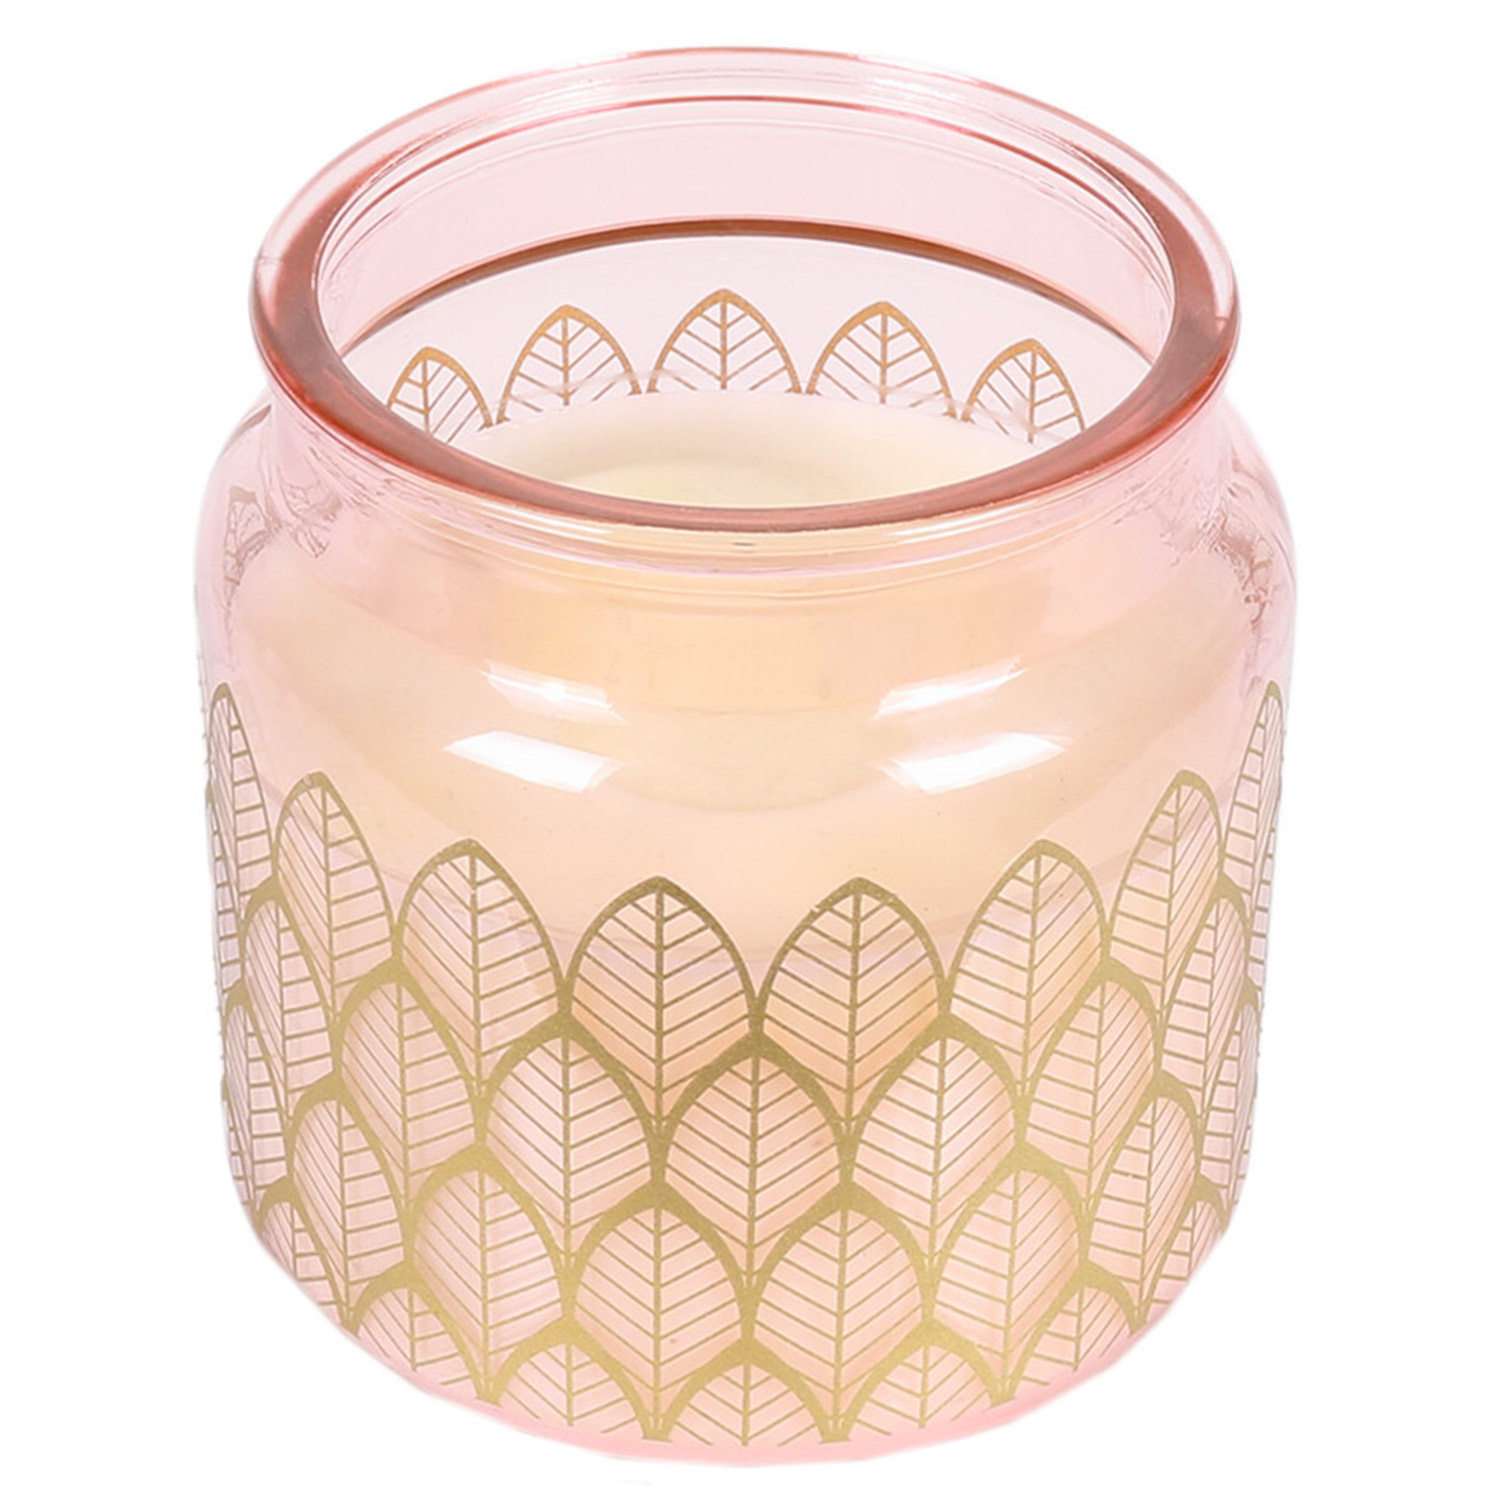 Tropical Blush Fragranced Candle Jar Image